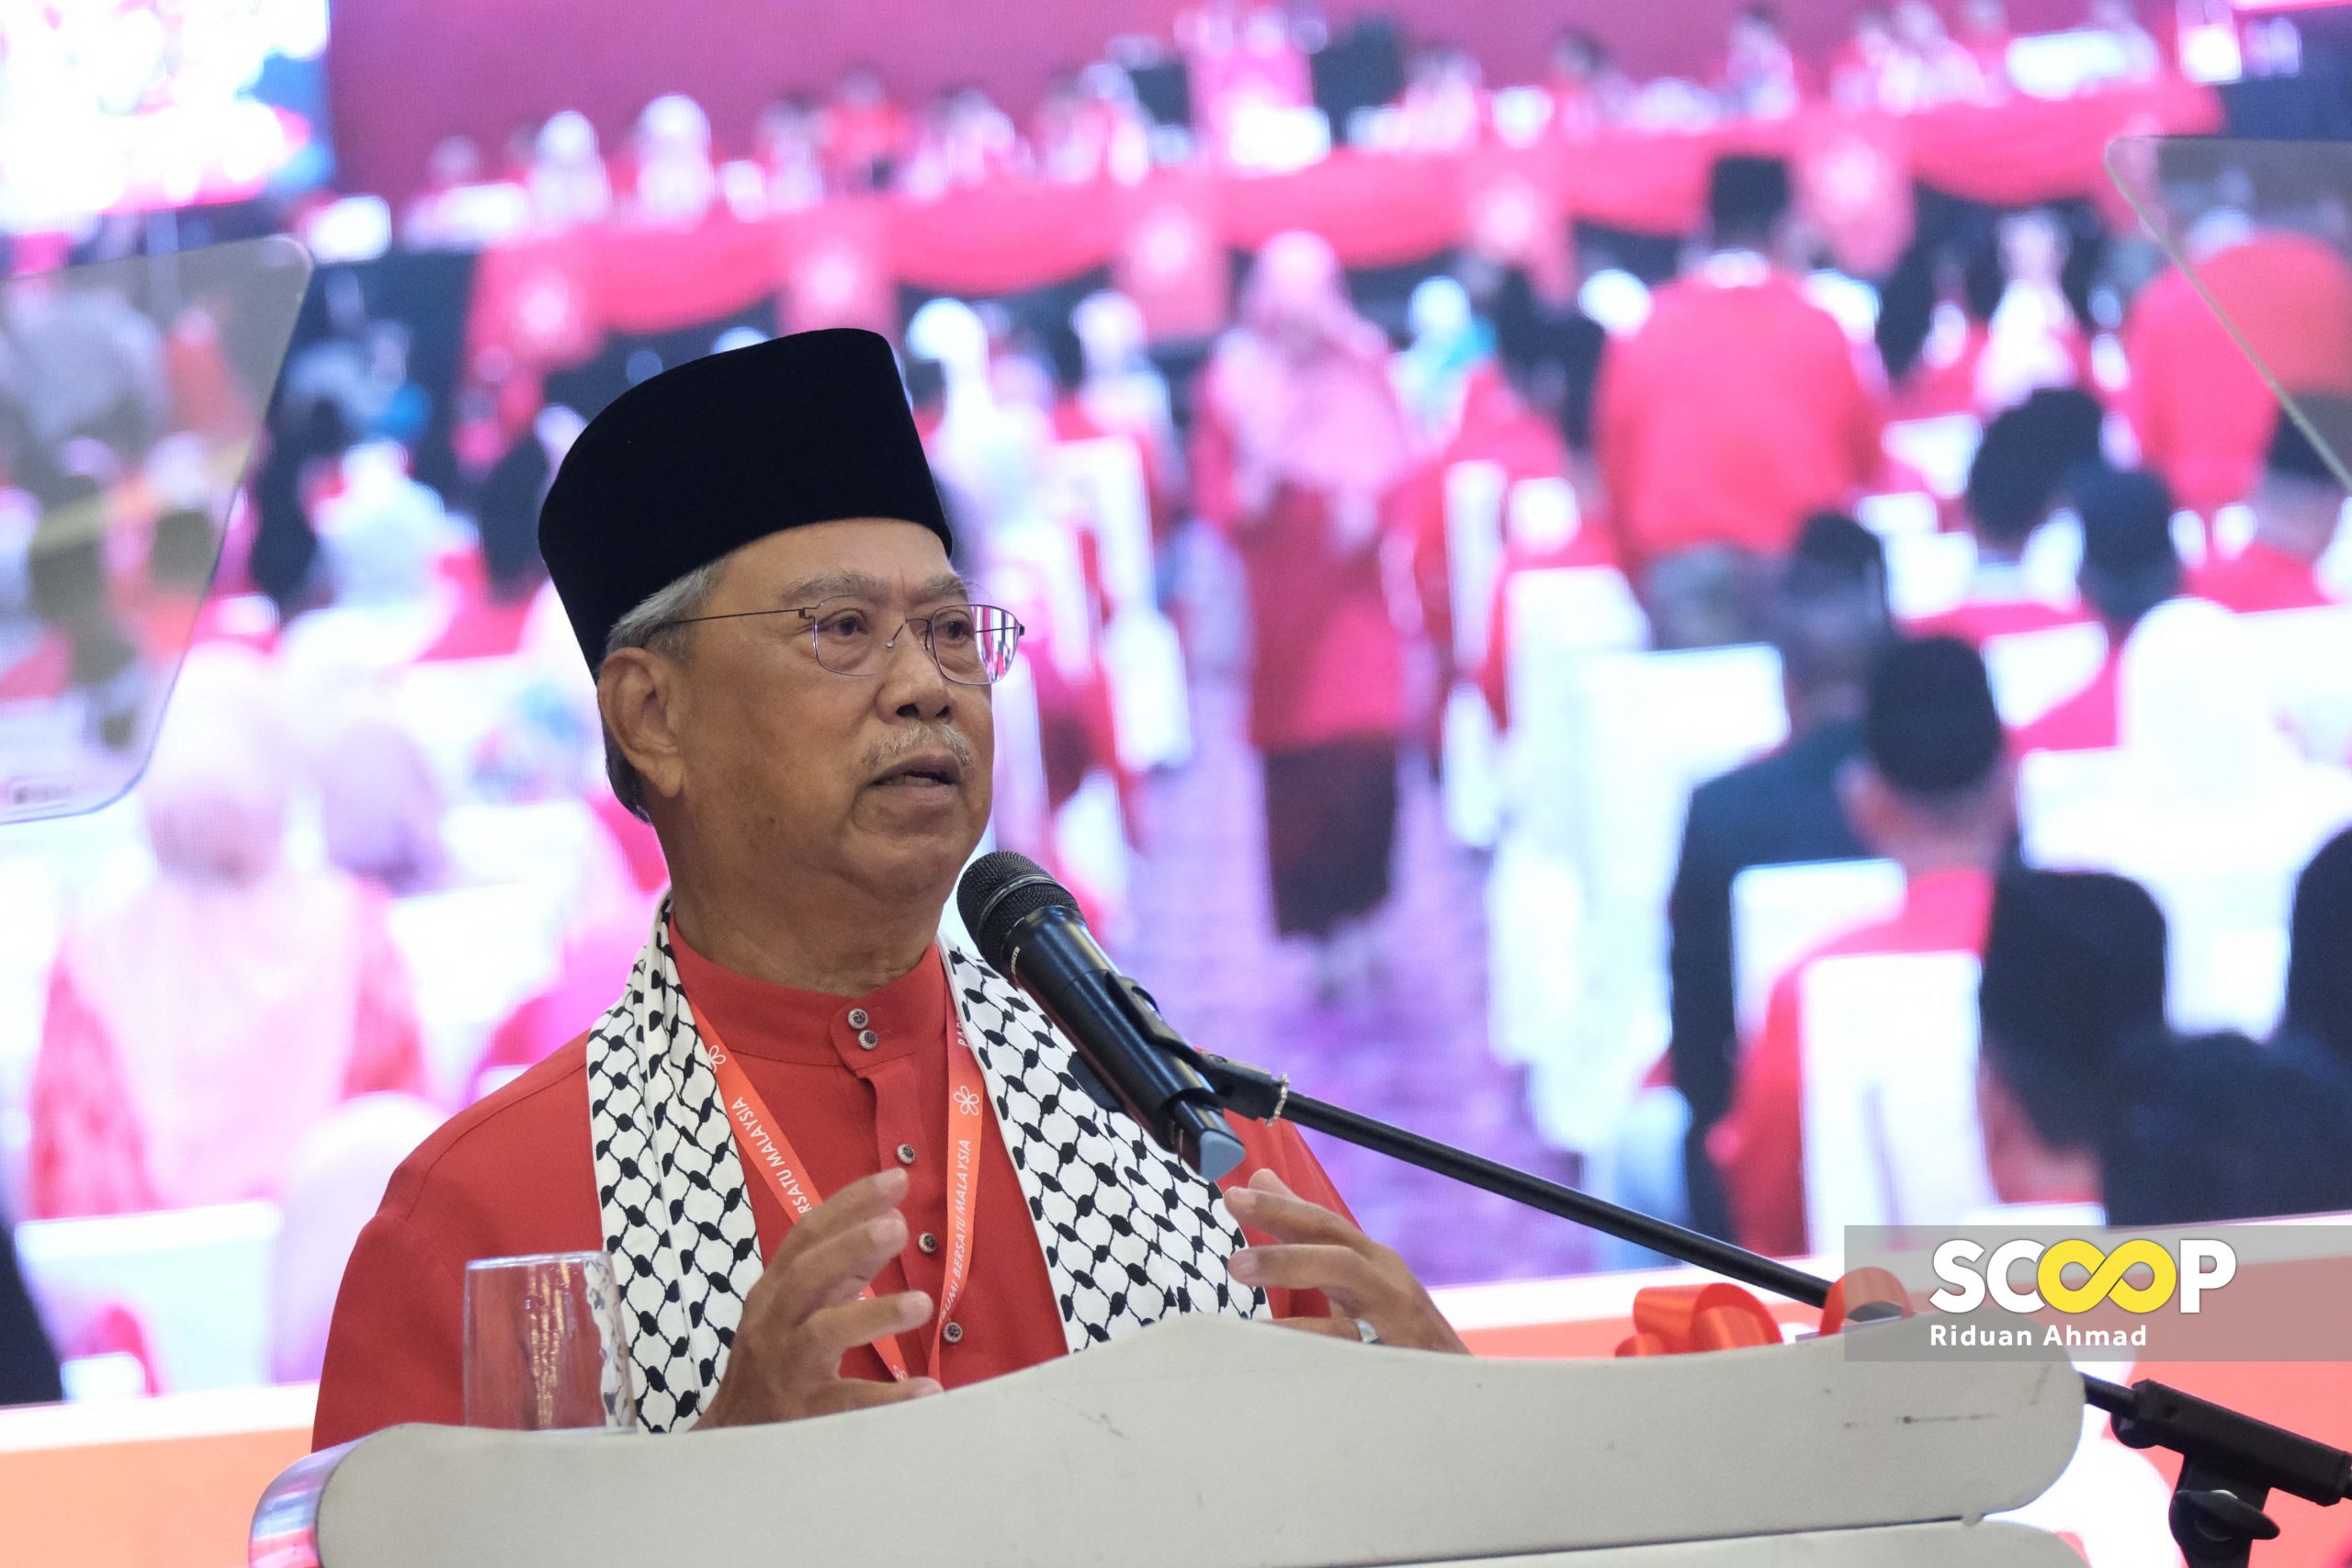 Bring back Bersatu chairman post for Muhyiddin: Johor leader